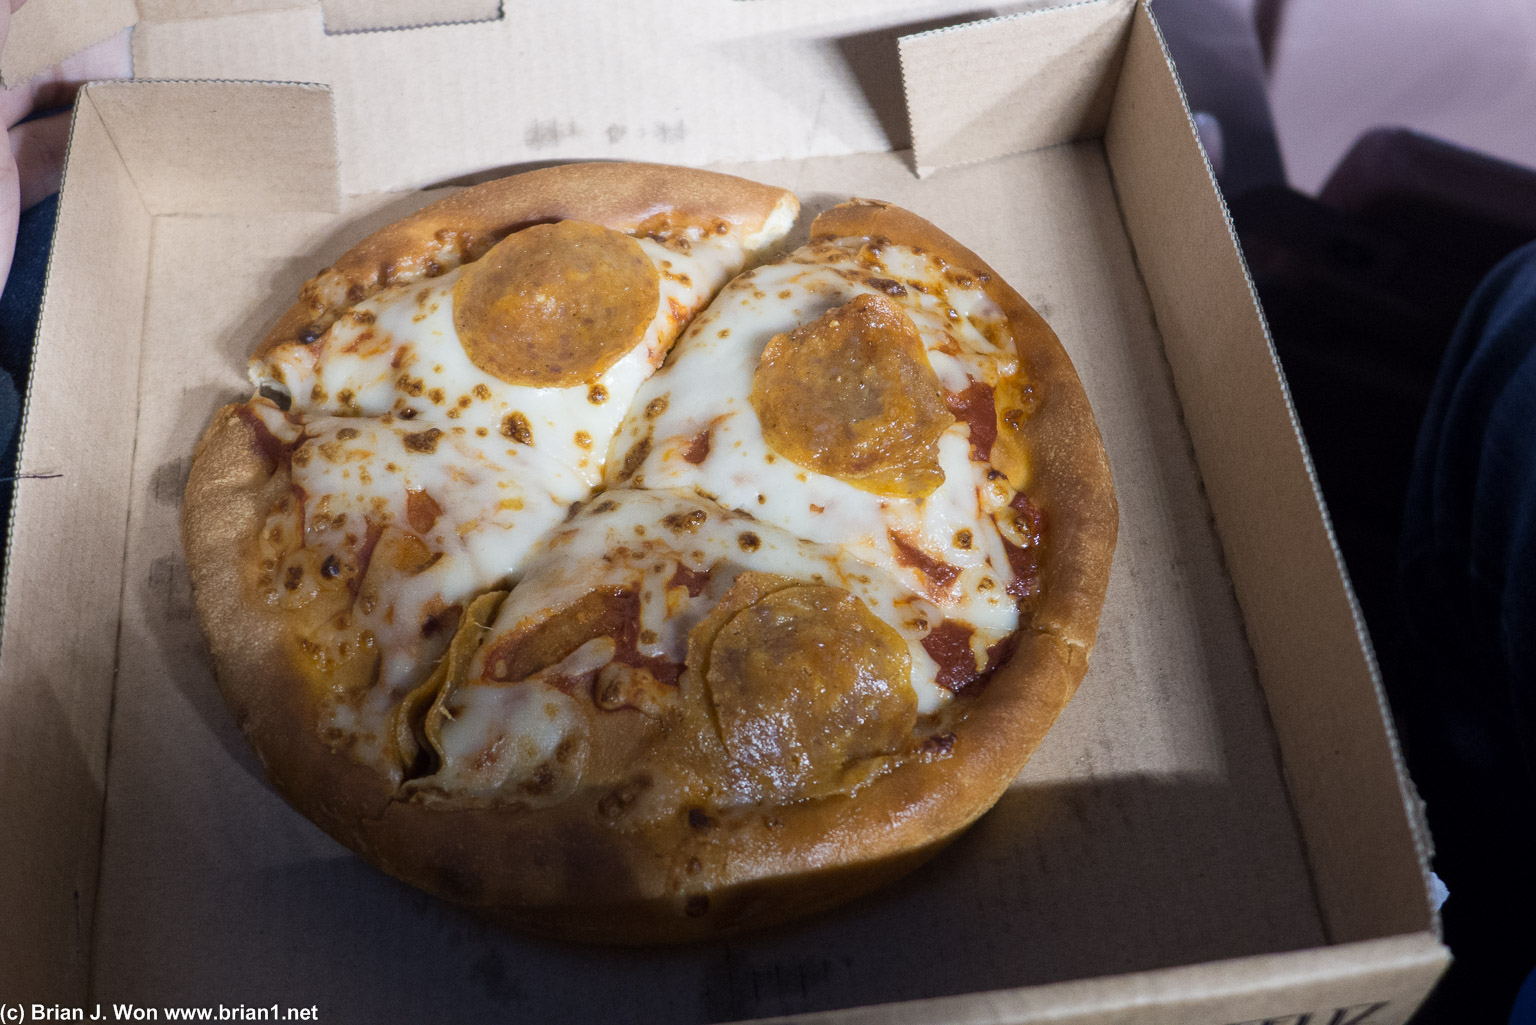 Very sad looking $9 pizza.